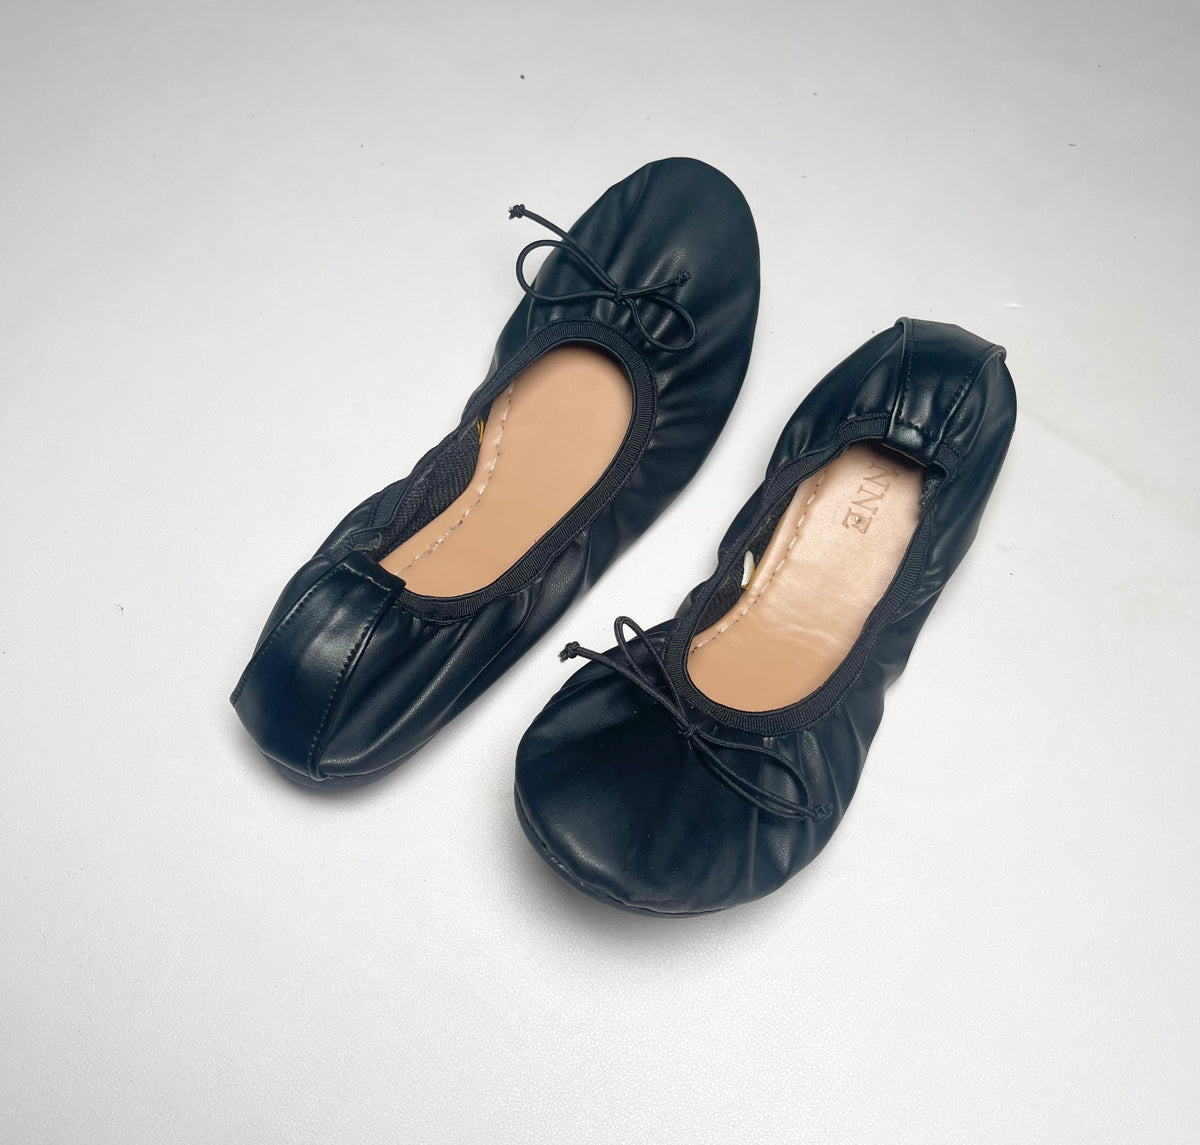 Adelle Doll Shoes Black